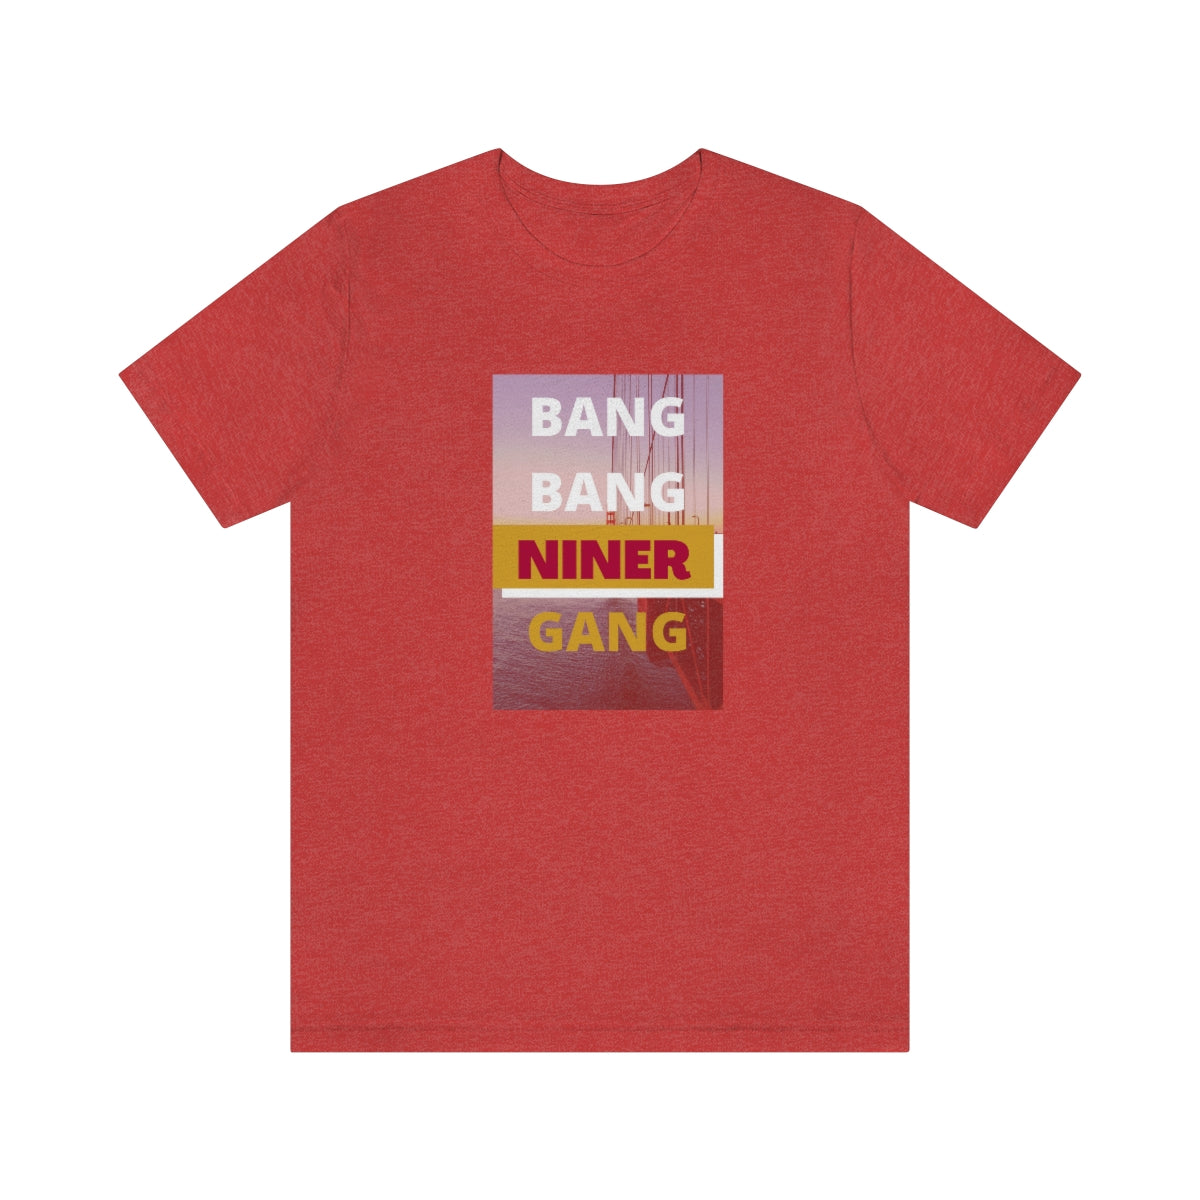 Niner Gang, San Francisco Niner, Garoppolo Tee